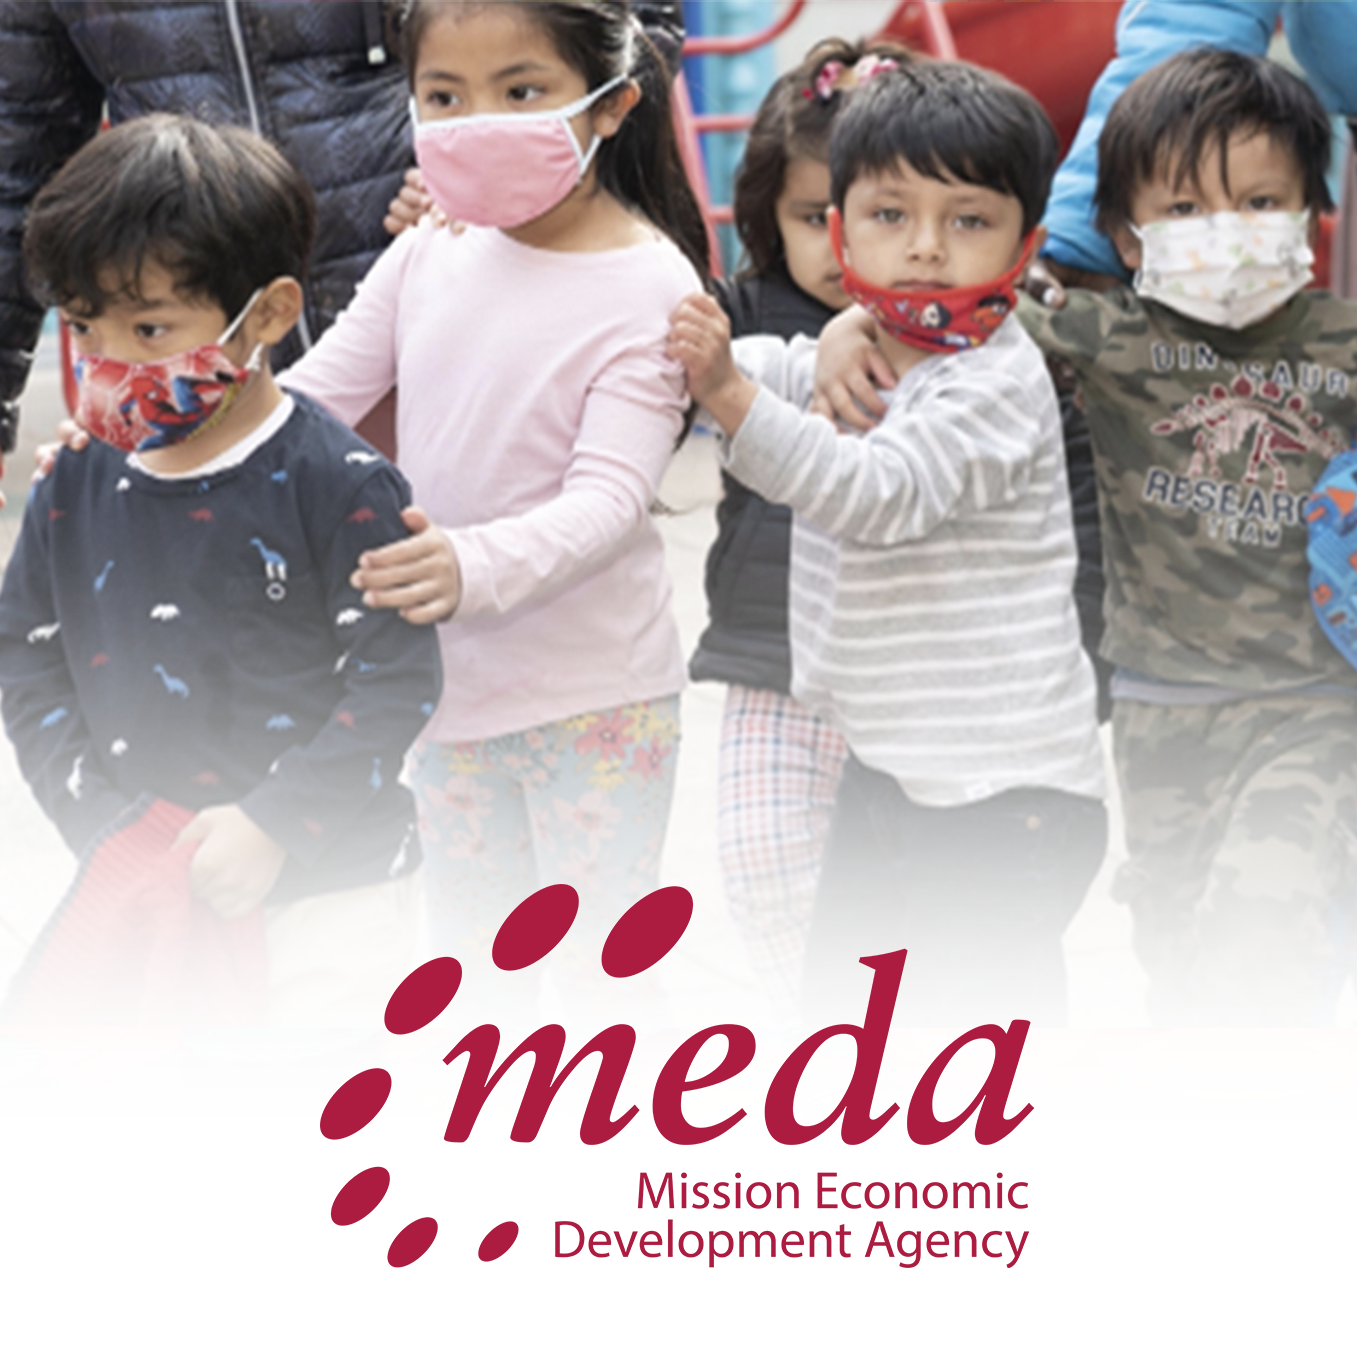 MEDA SF Partnership - Mission Economic Development Agency